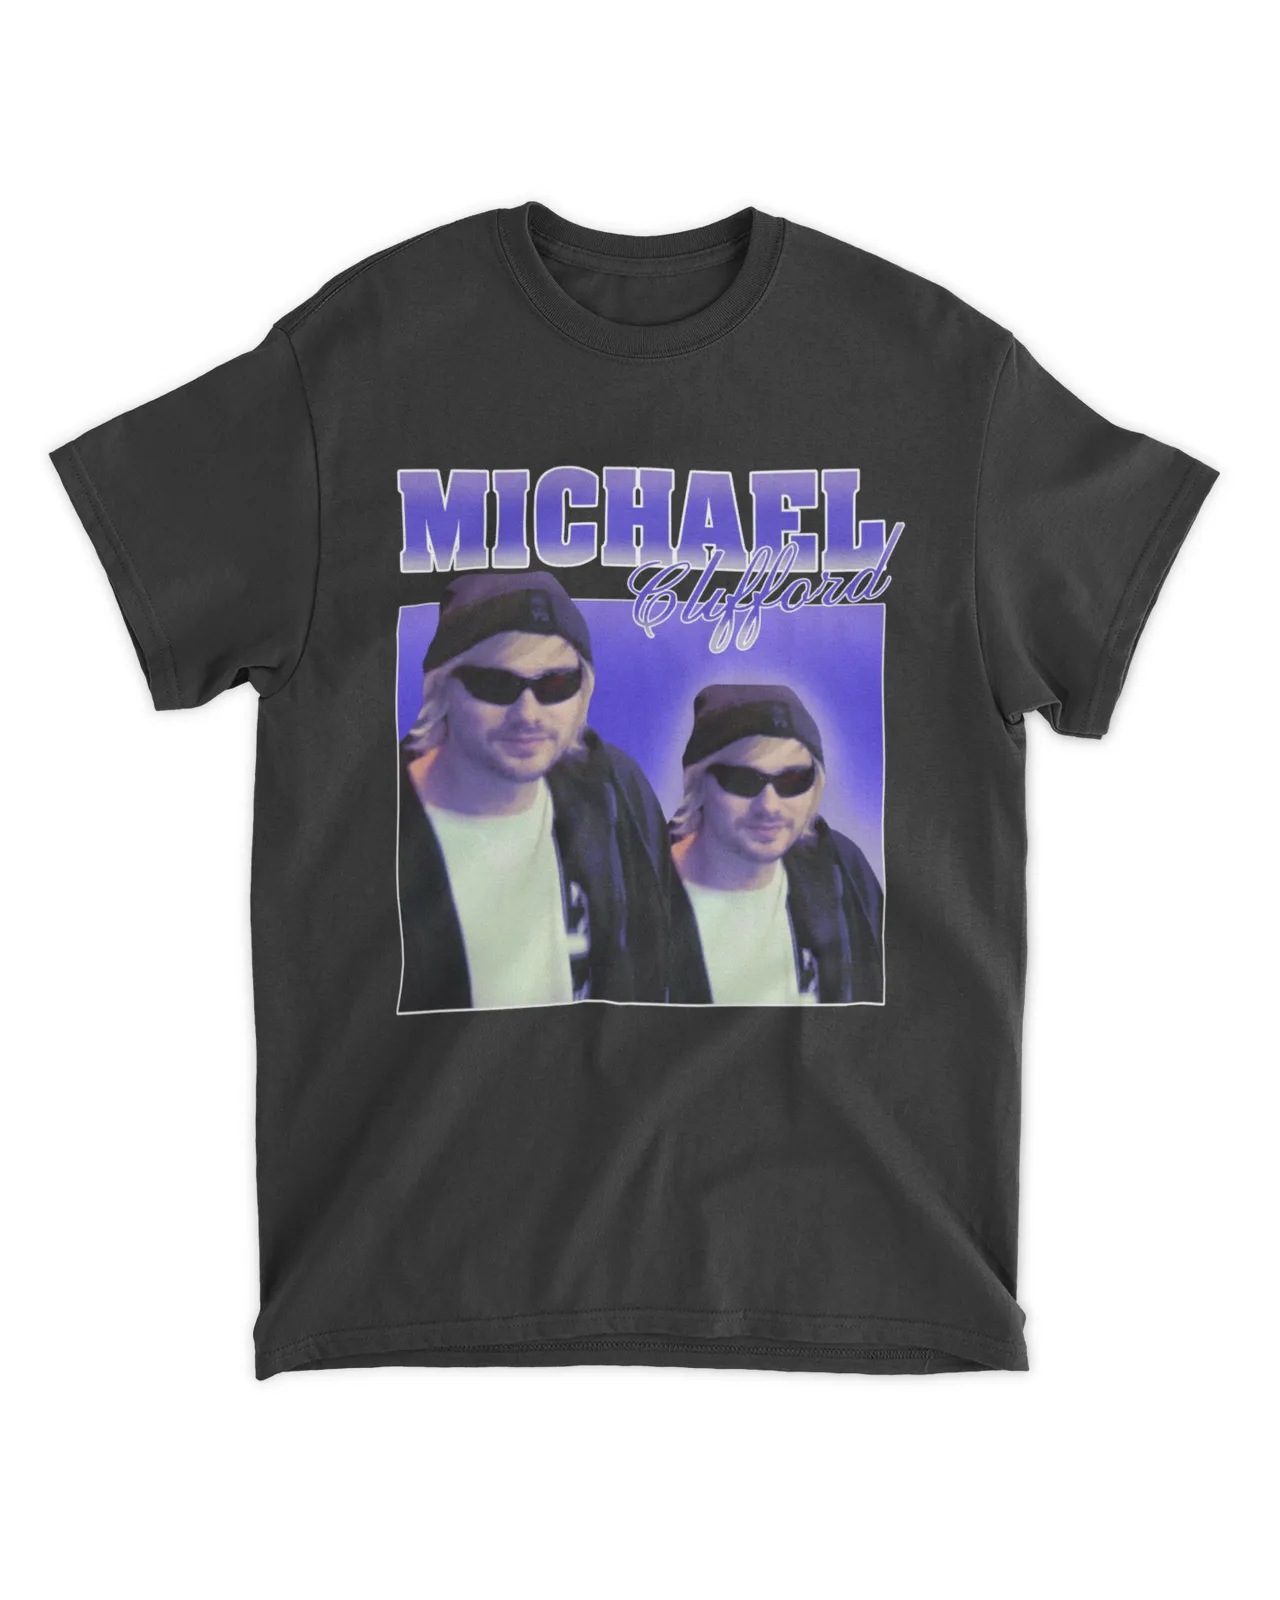 Michael Clifford Date of Birth Sweatshirt